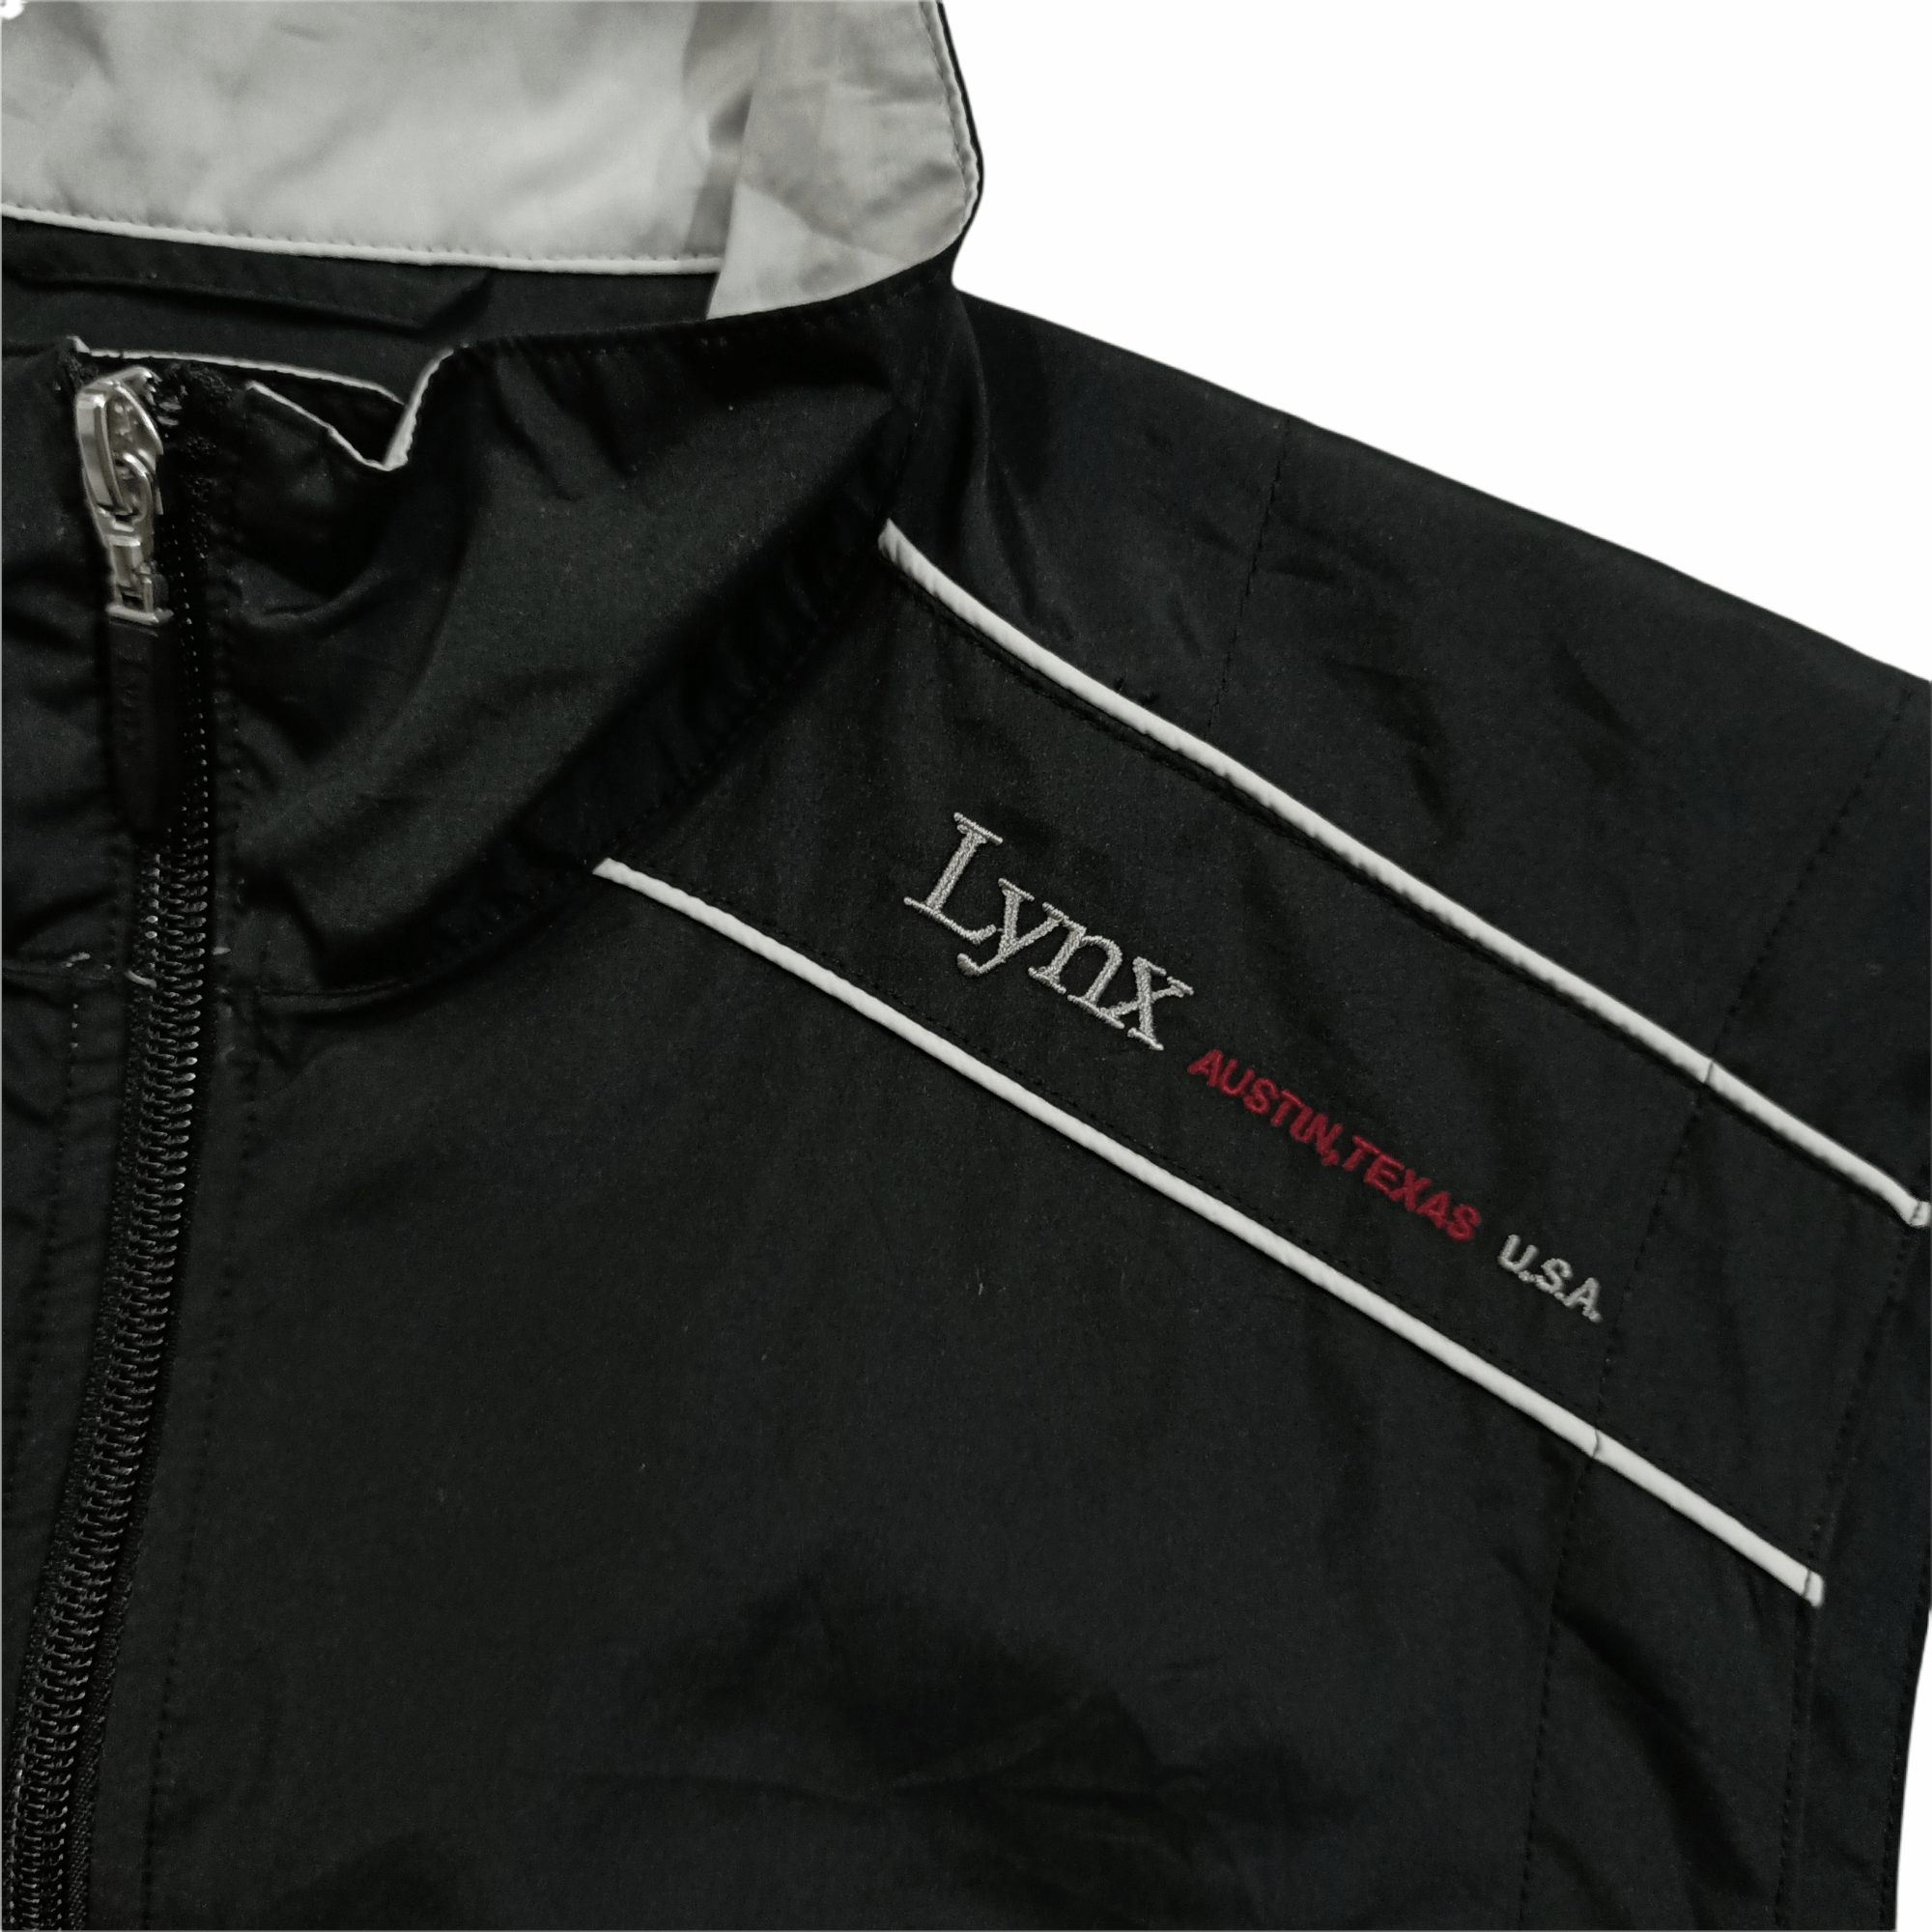 Steal💥 LYNX Austin Texas U.S.A Japanese Brand Vest - 5